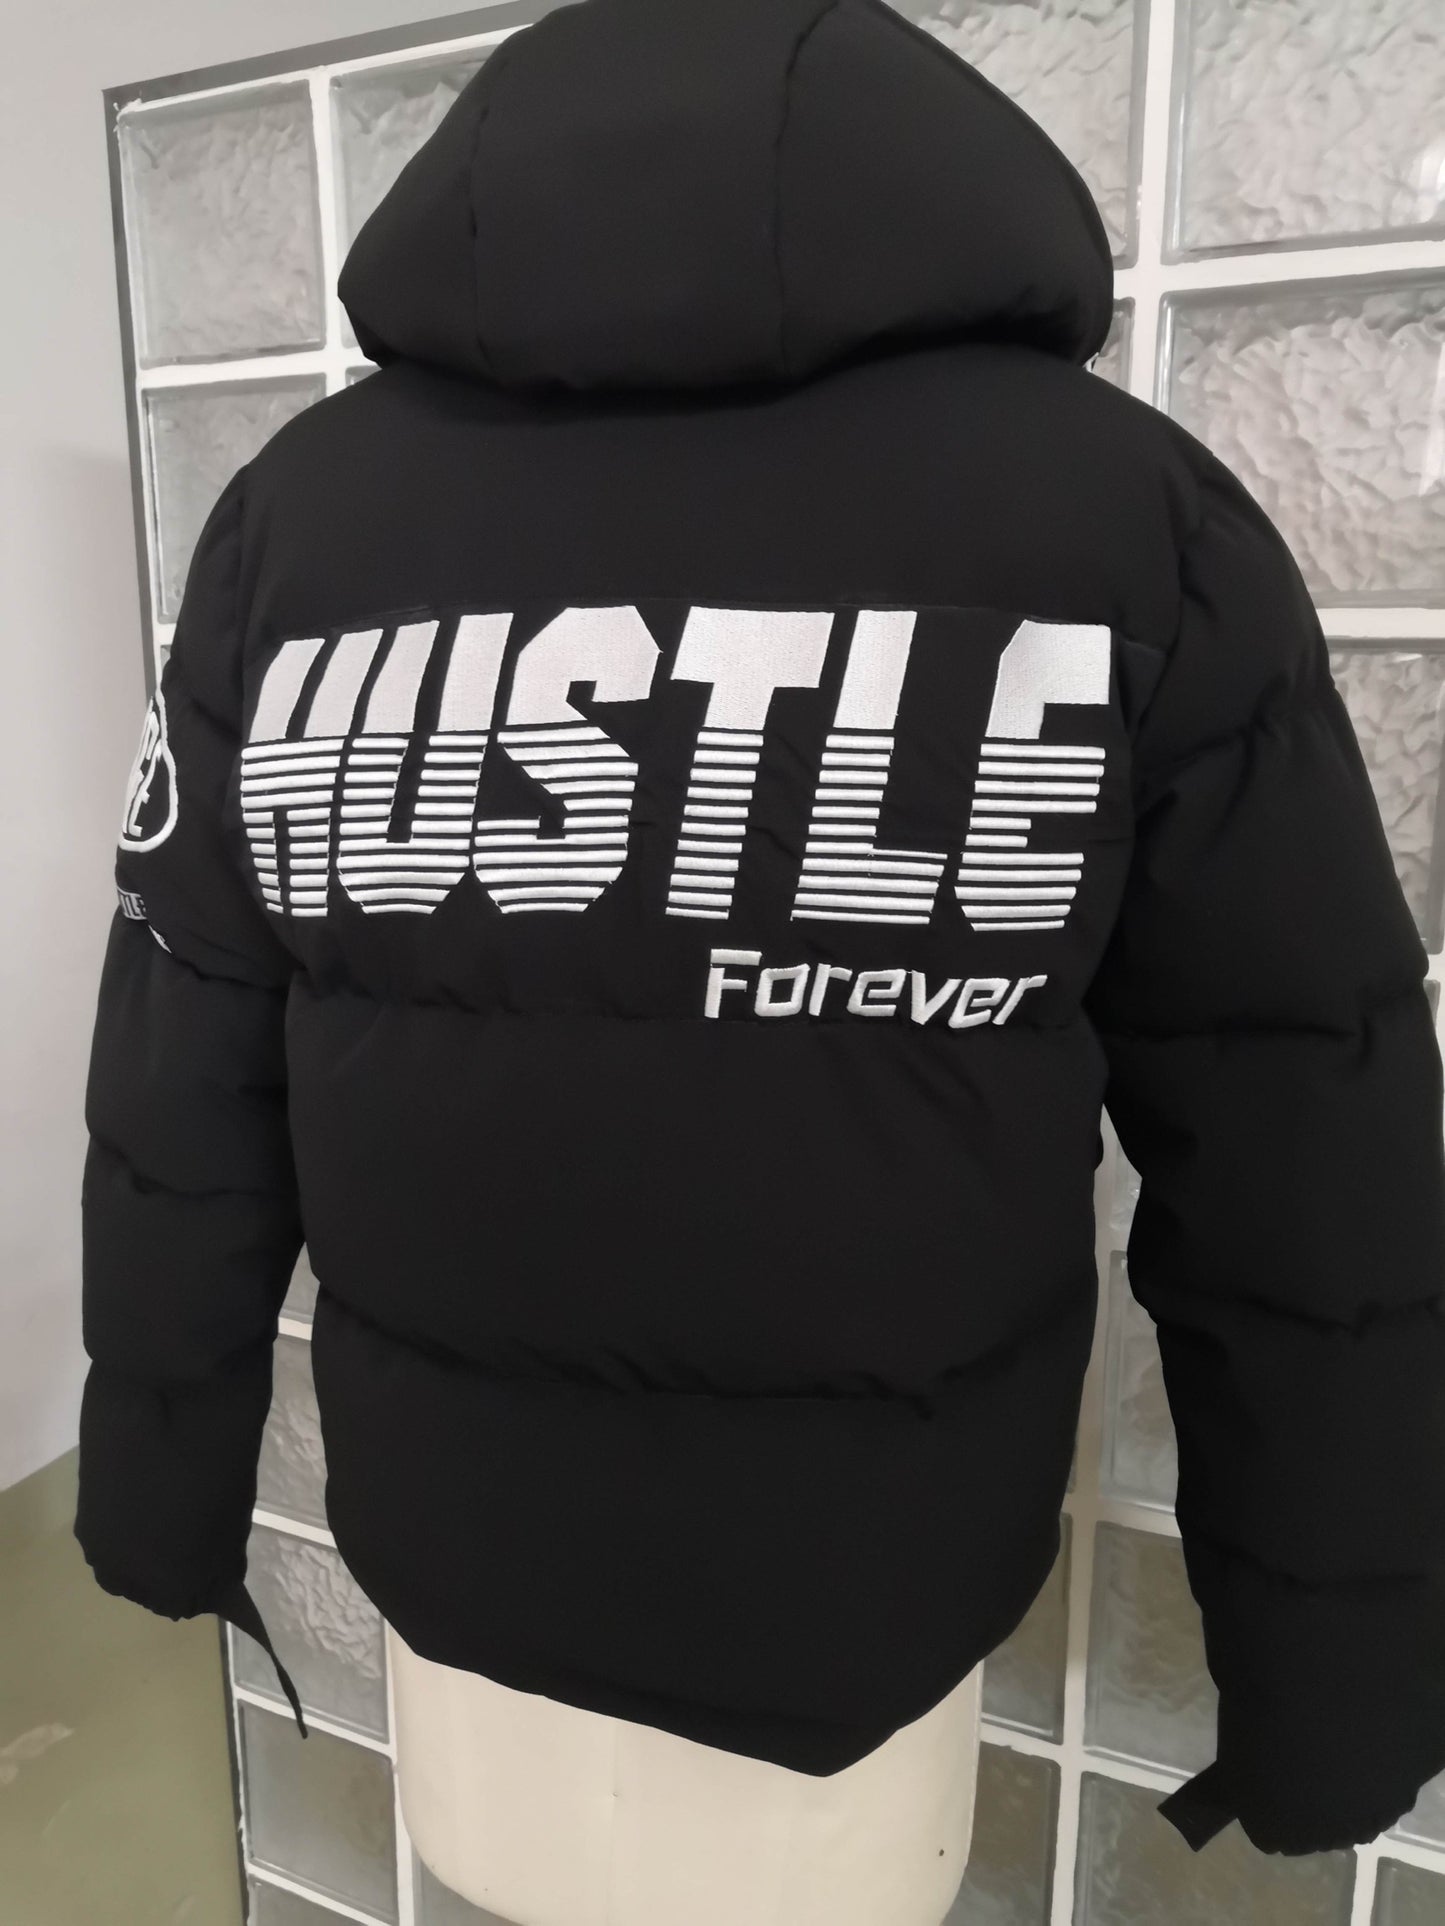 Forever Hustle “Utility” Jacket